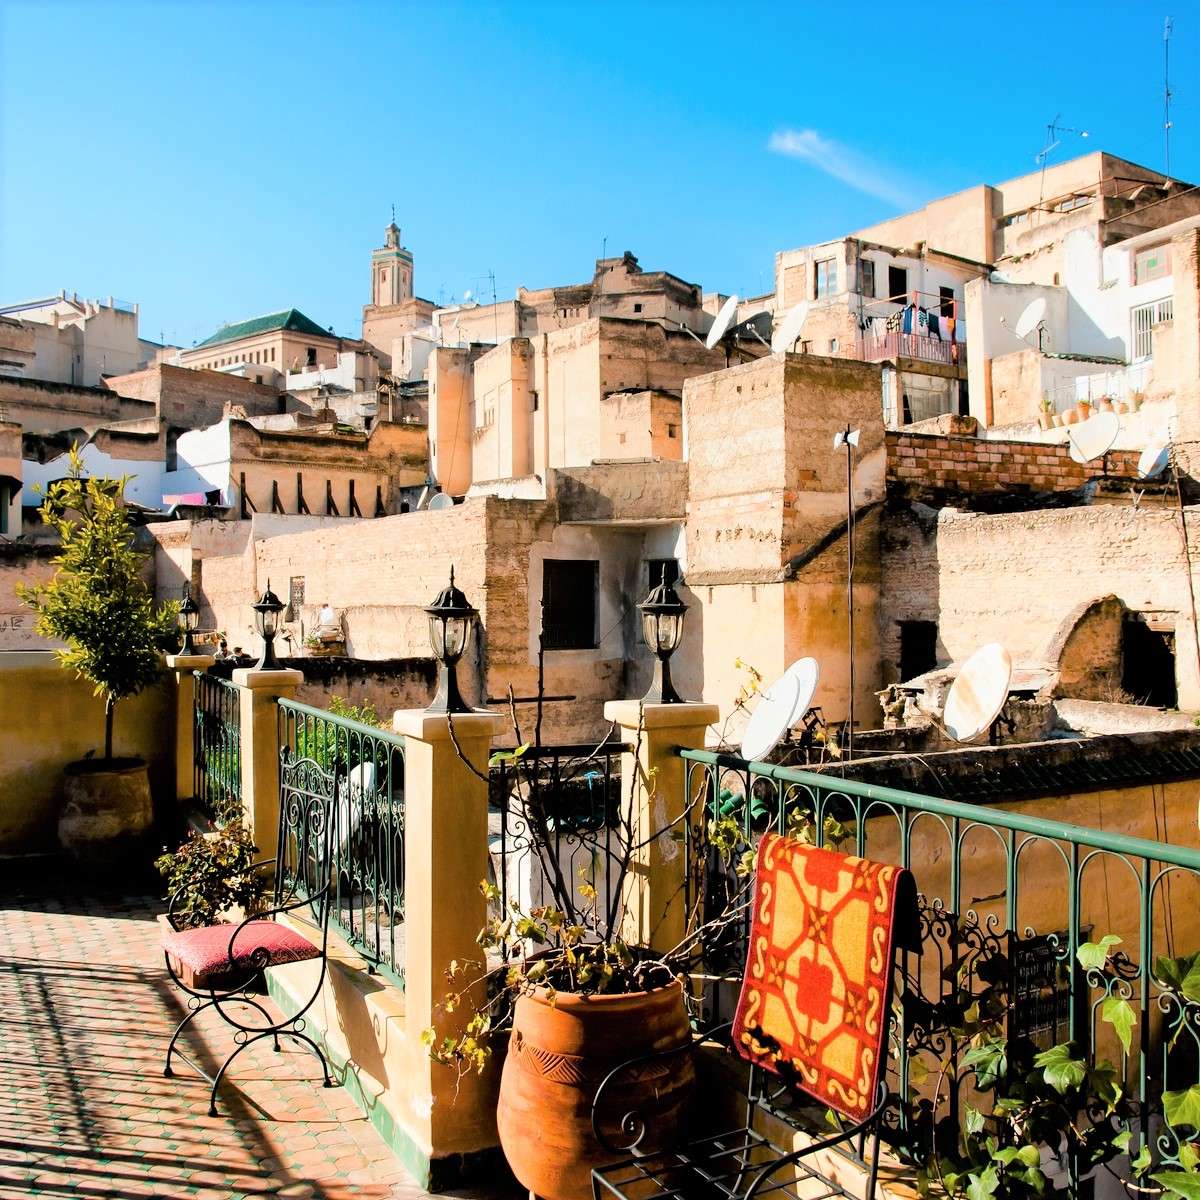 Oraș din Maroc Africa jigsaw puzzle online